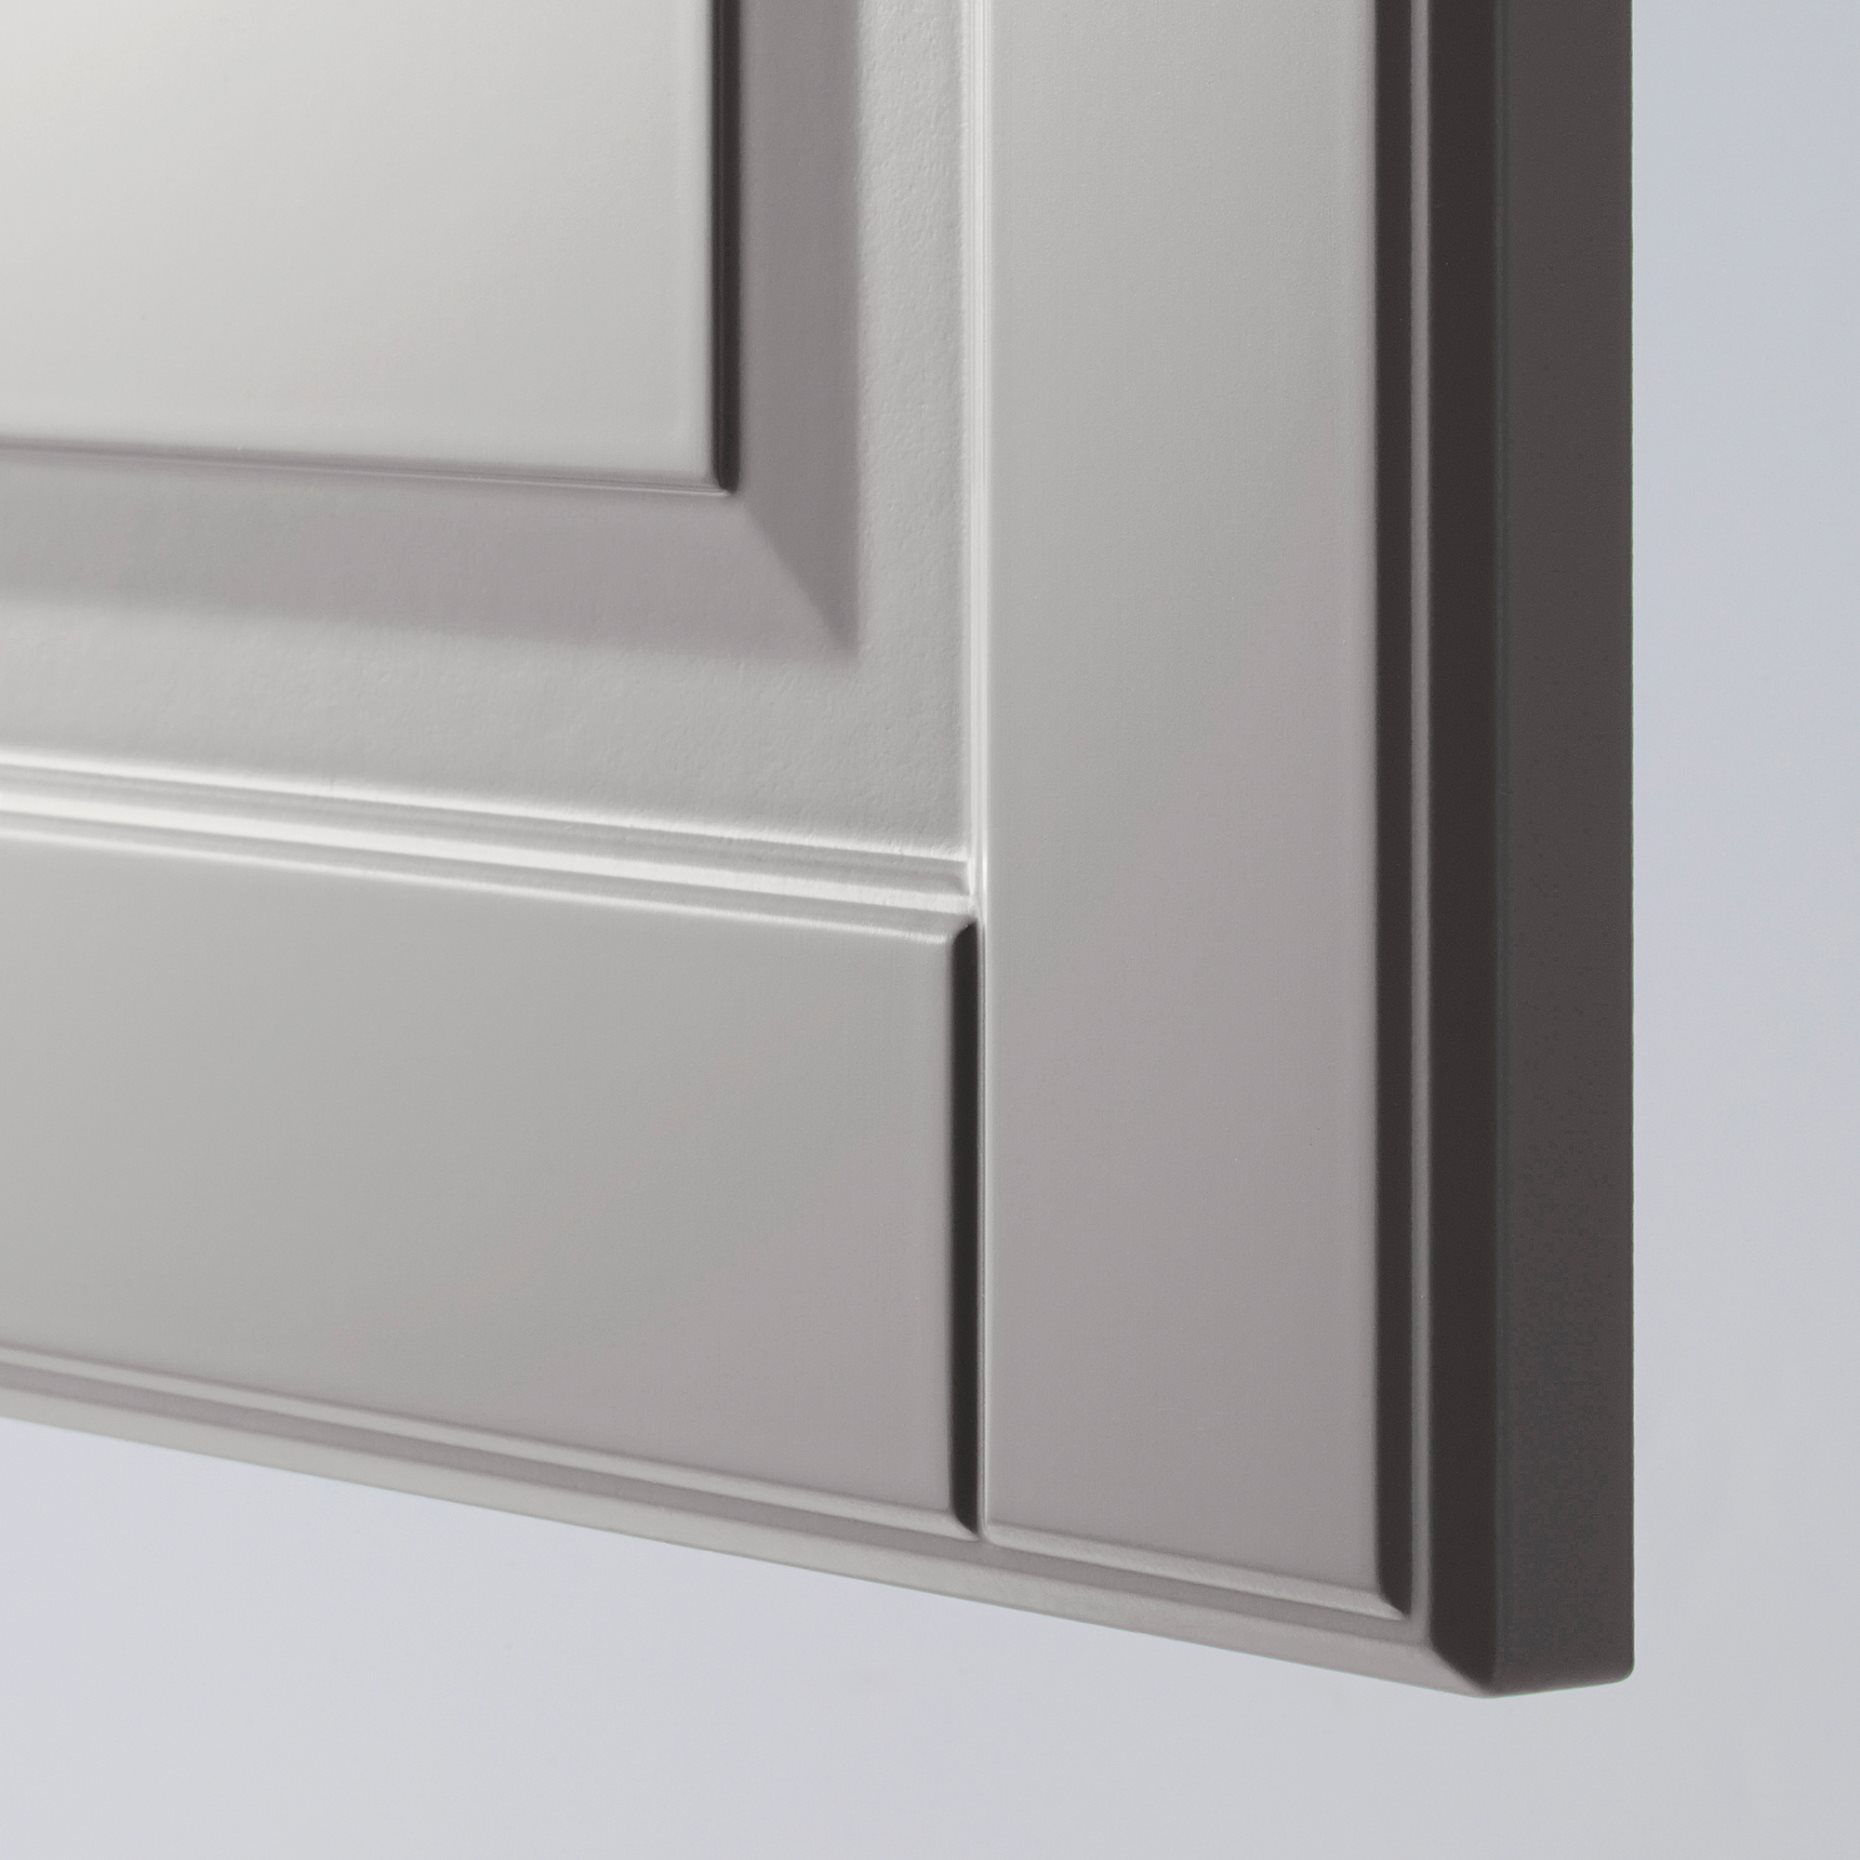 METOD, ντουλάπι βάσης με ράφια/2 πόρτες, 80x60 cm, 694.594.06